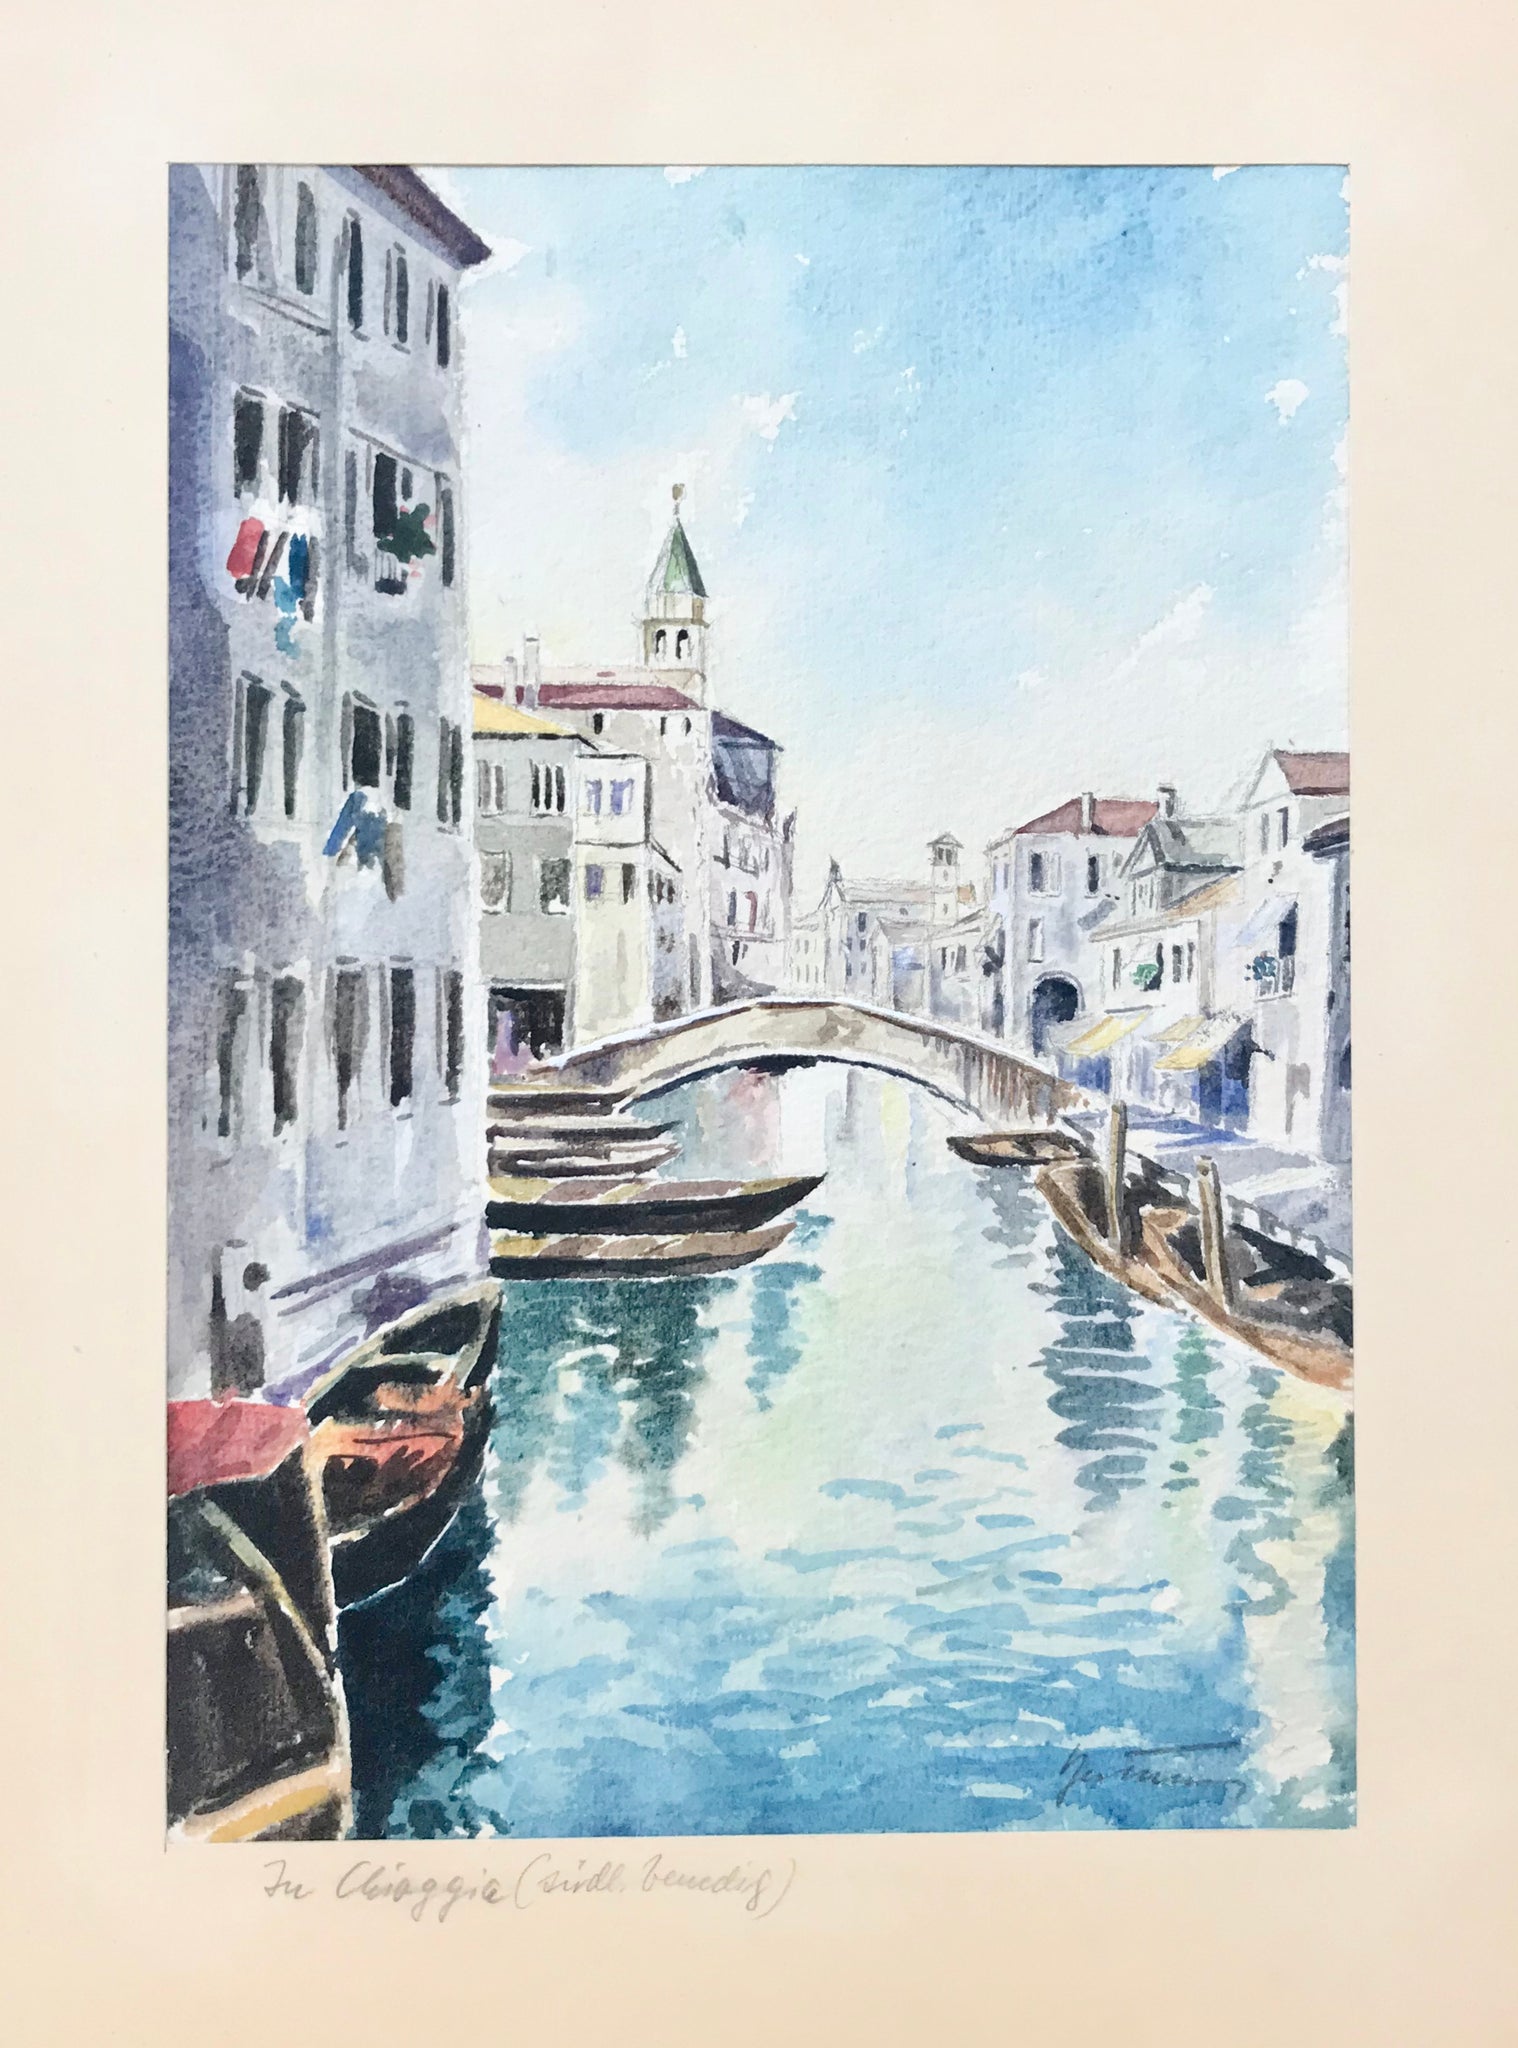 Title written in pencil on passpartout: "Chioggia (suedl. Venedig)"  Very pleasant original watercolor painting of a picturesque part of Chioggia.